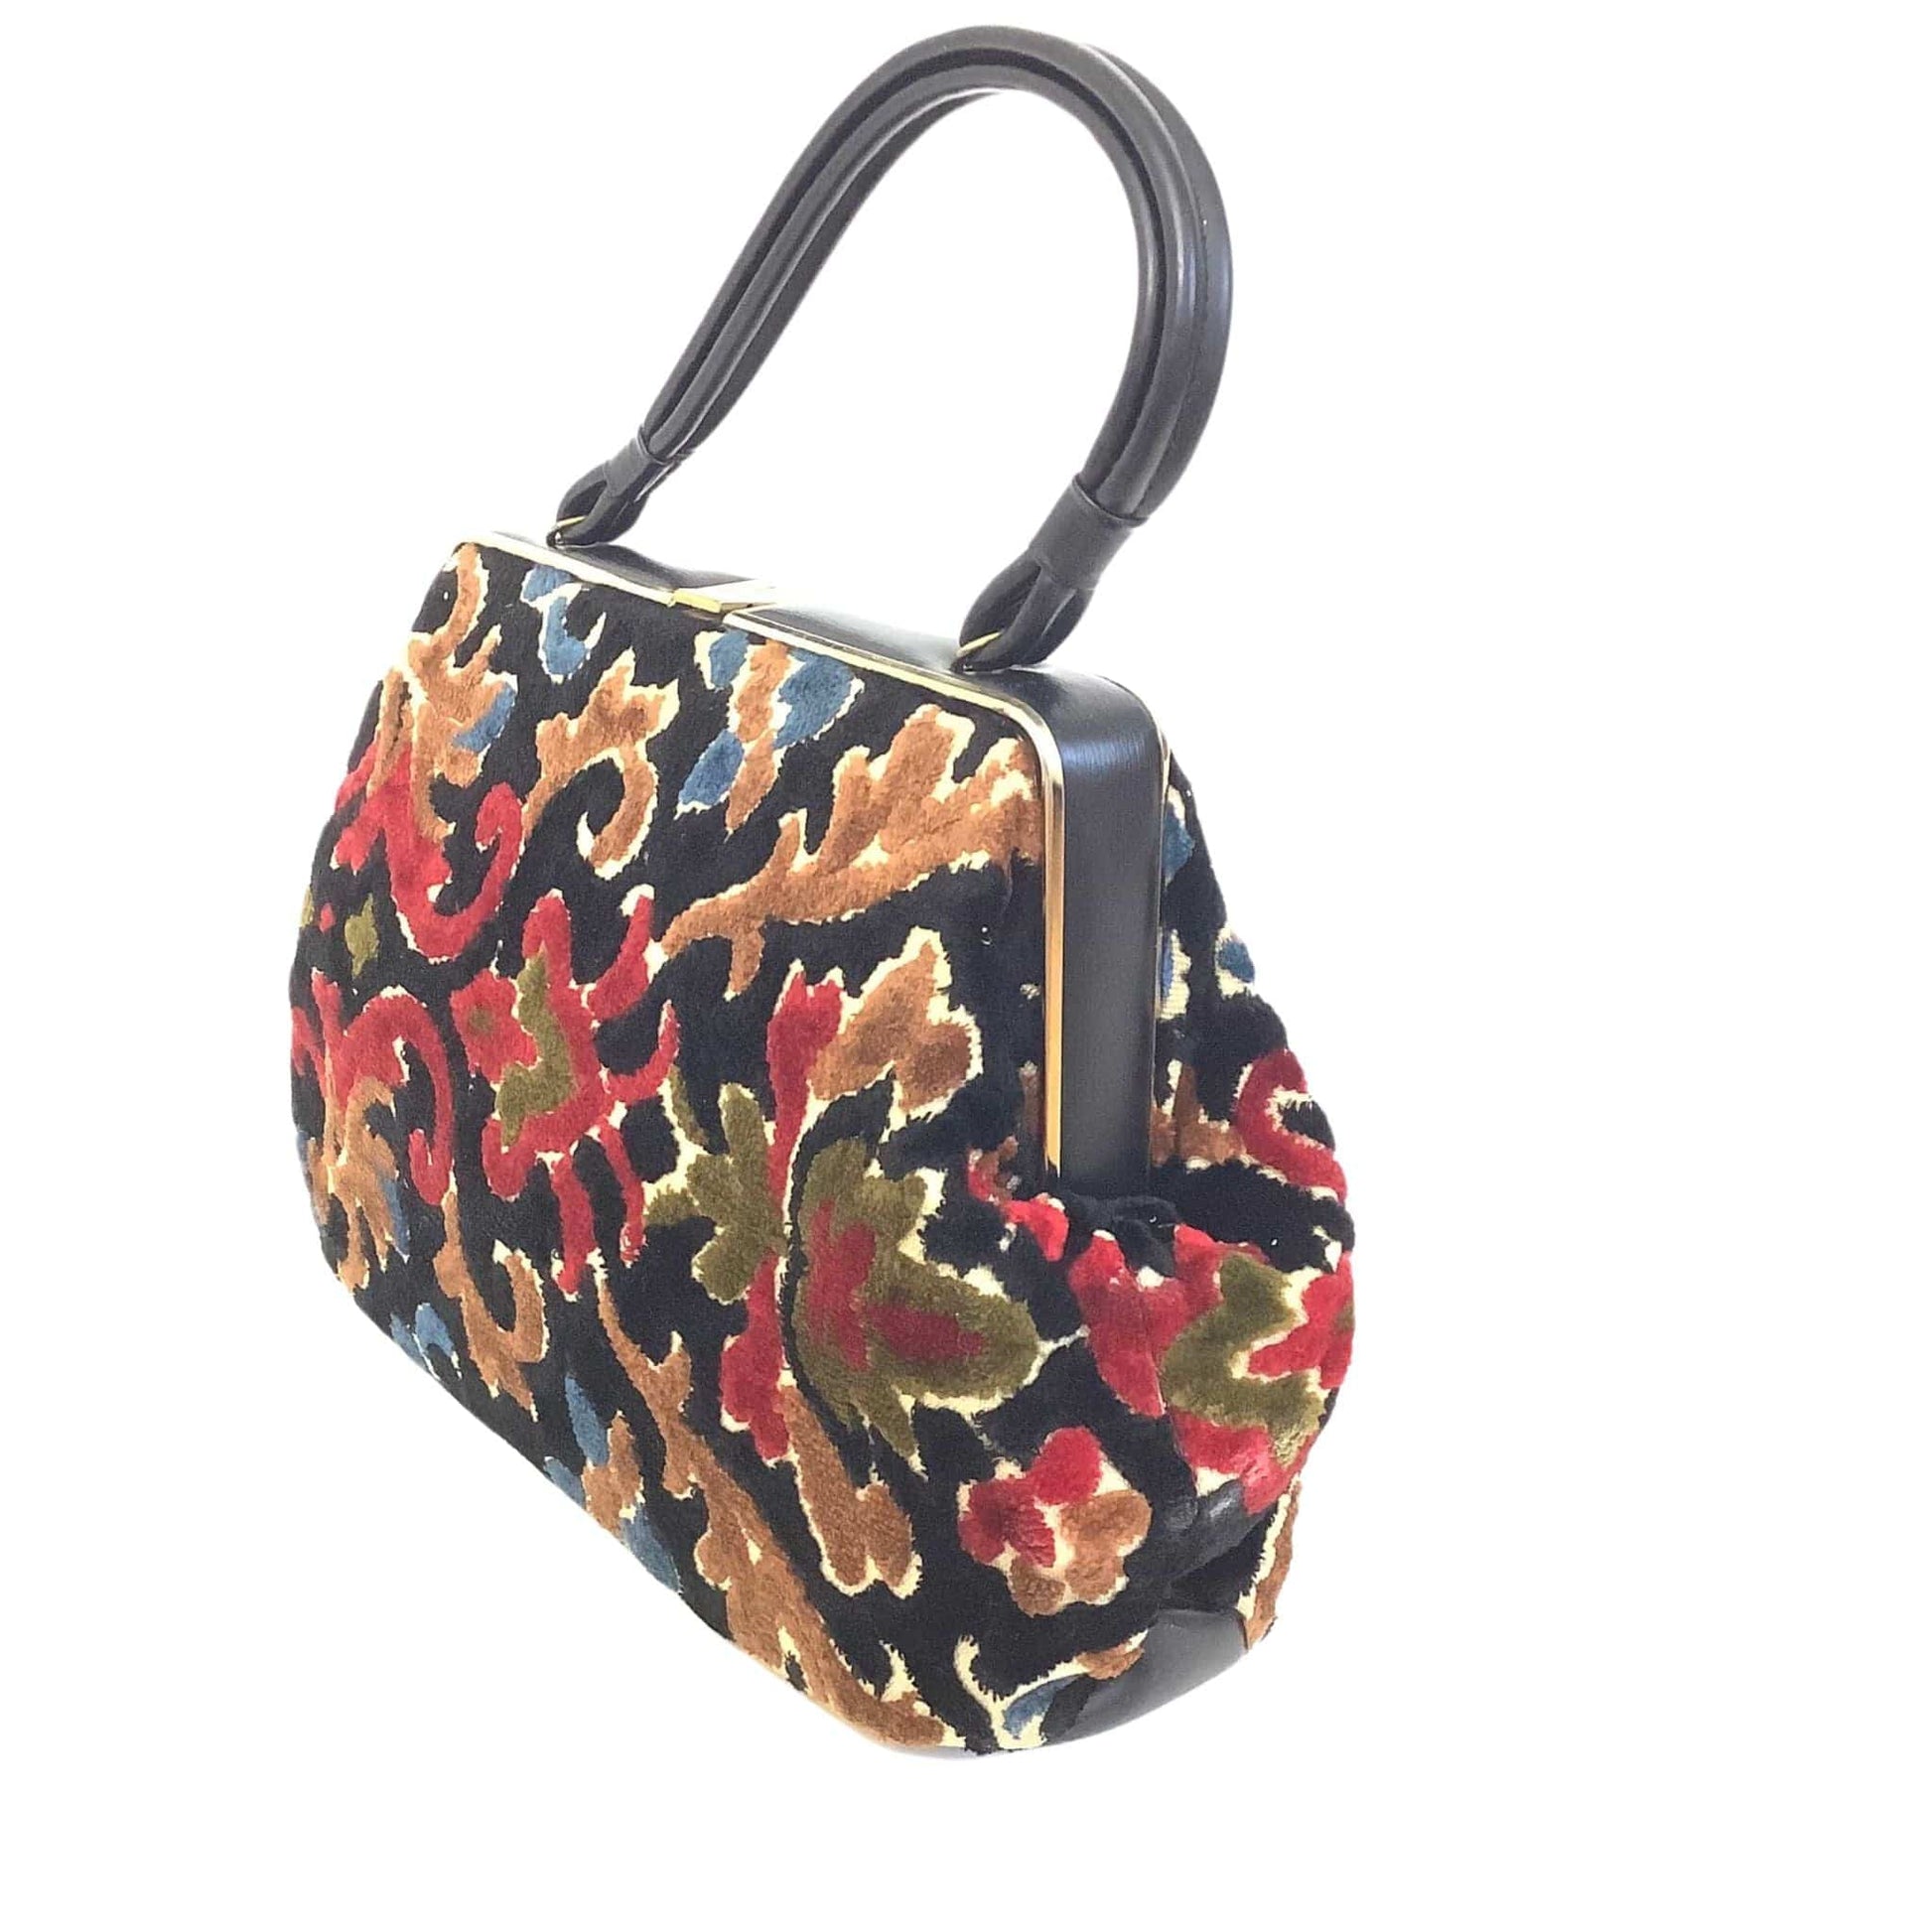 Vintage Tapestry Handbag Purses Auction